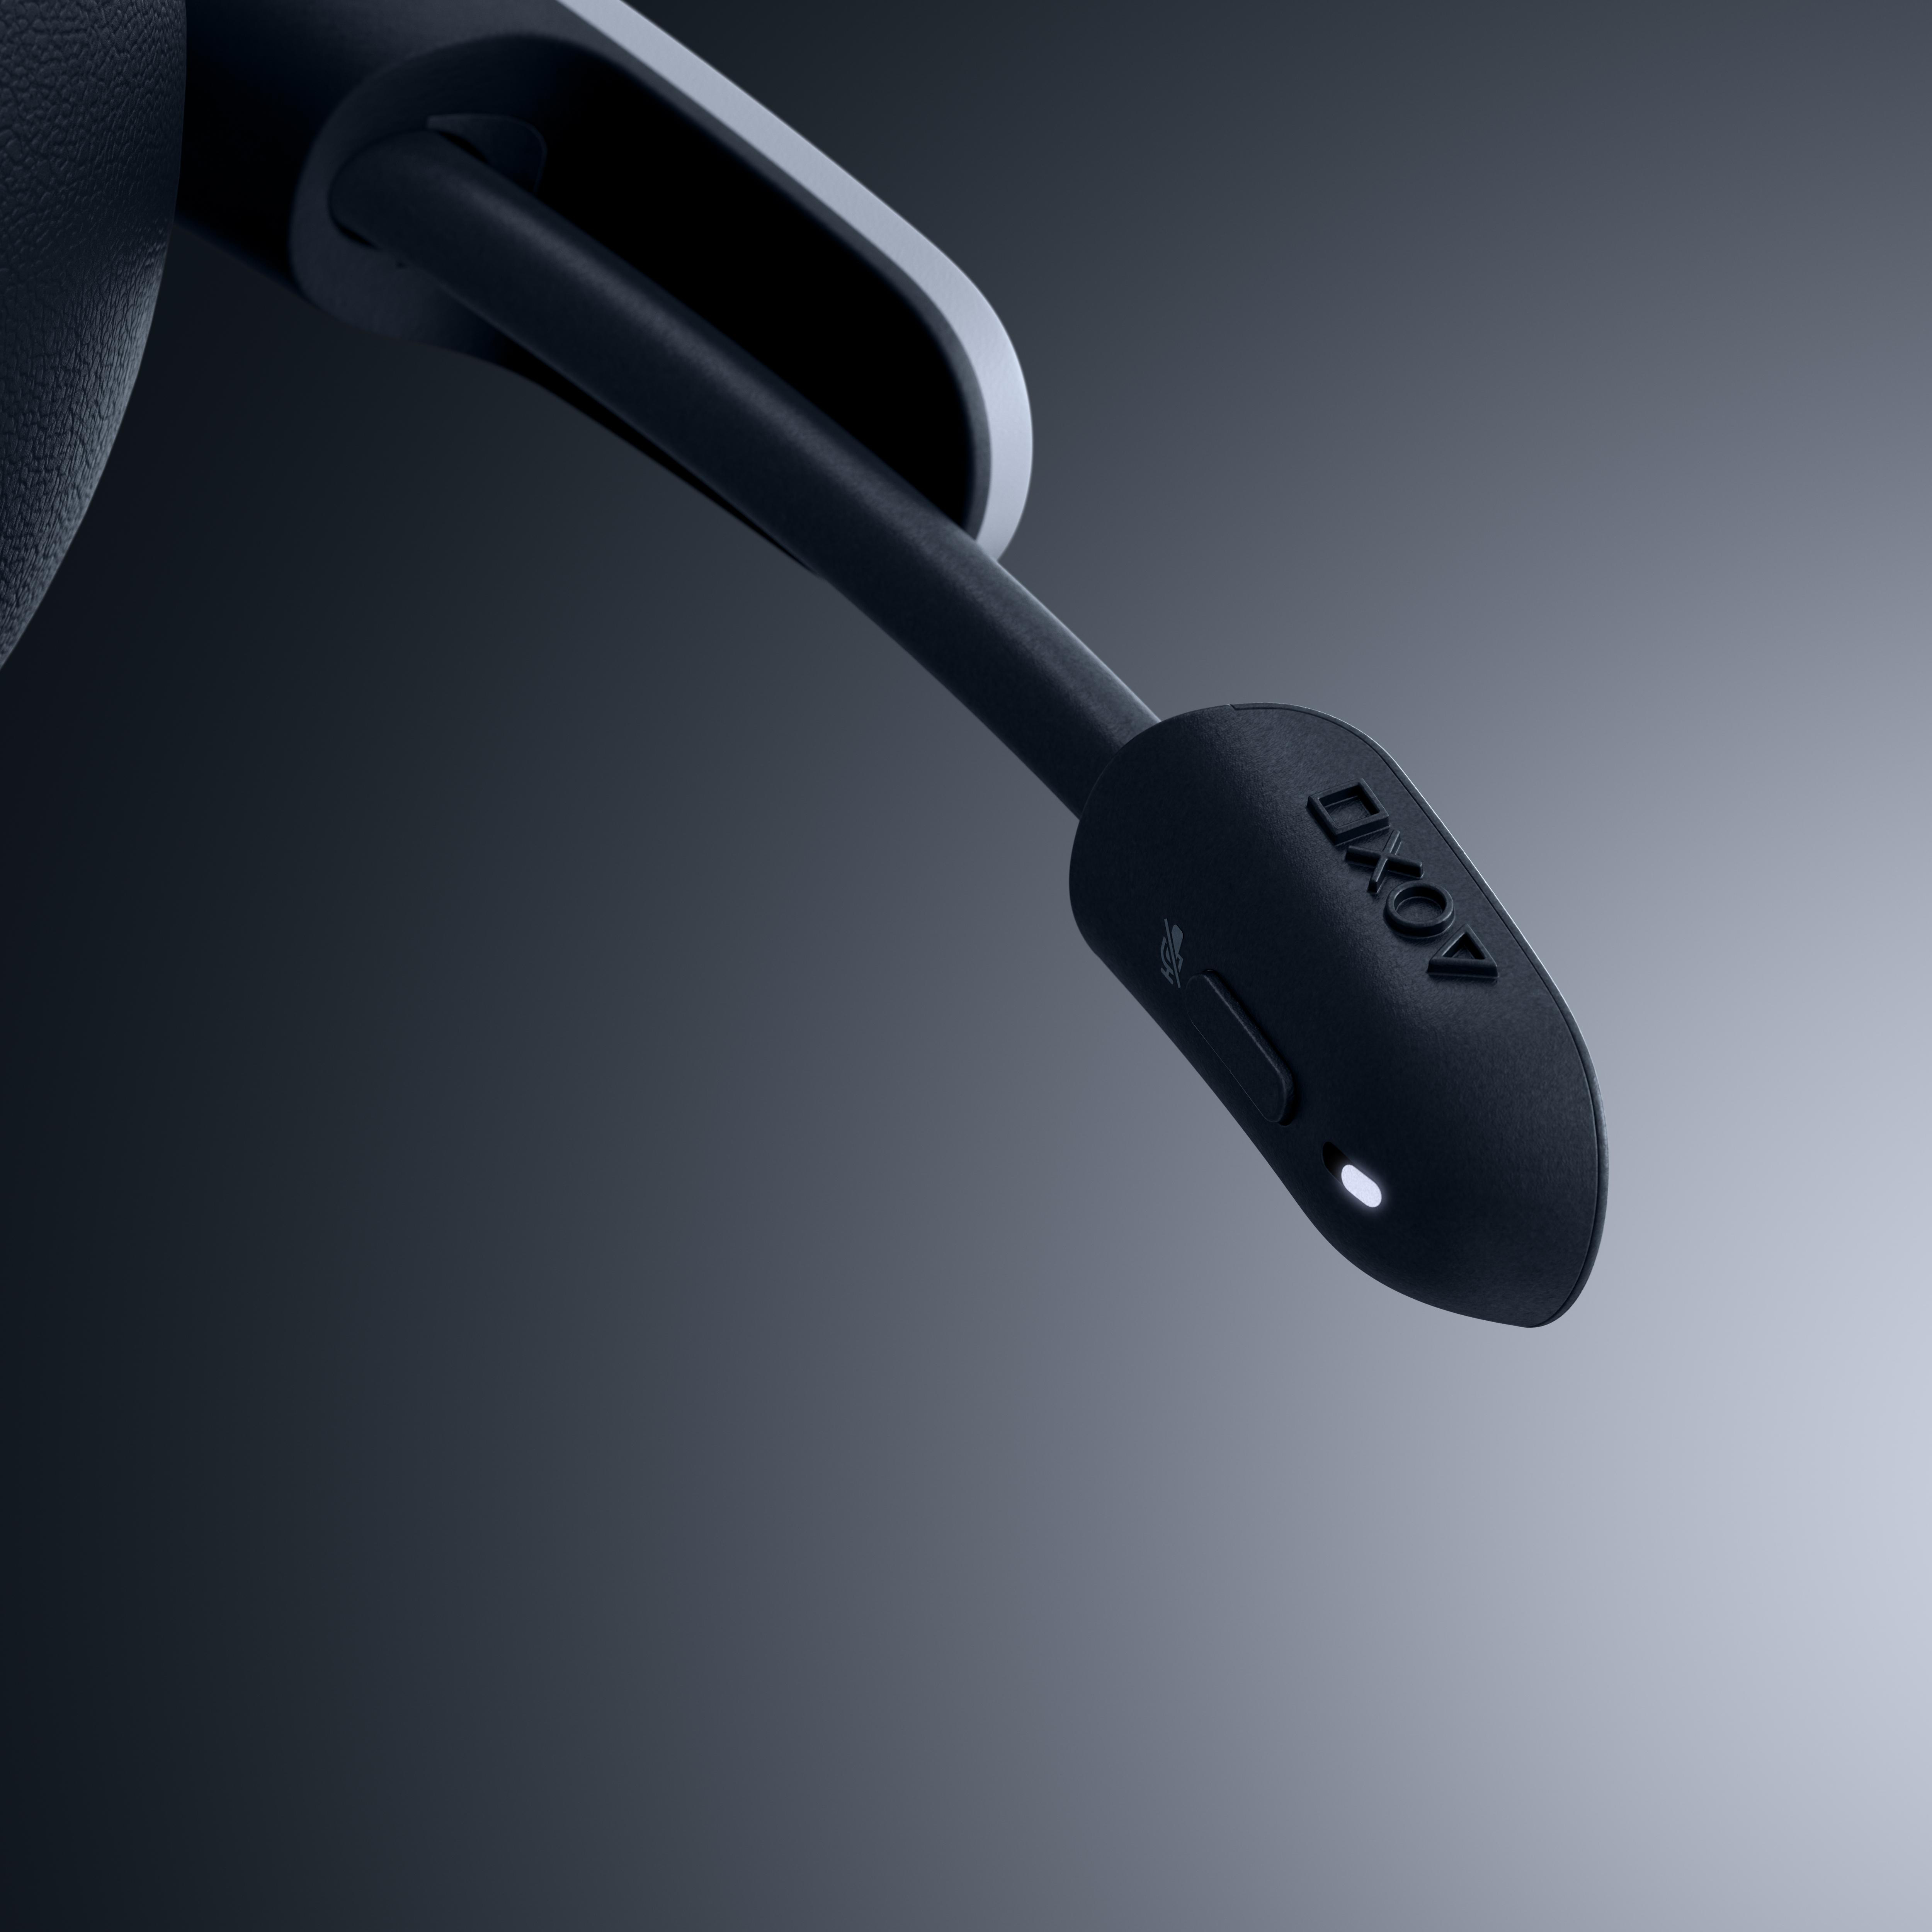 SONY Pulse Elite, Over-ear Weiß Schwarz / Bluetooth Gaming-Headset